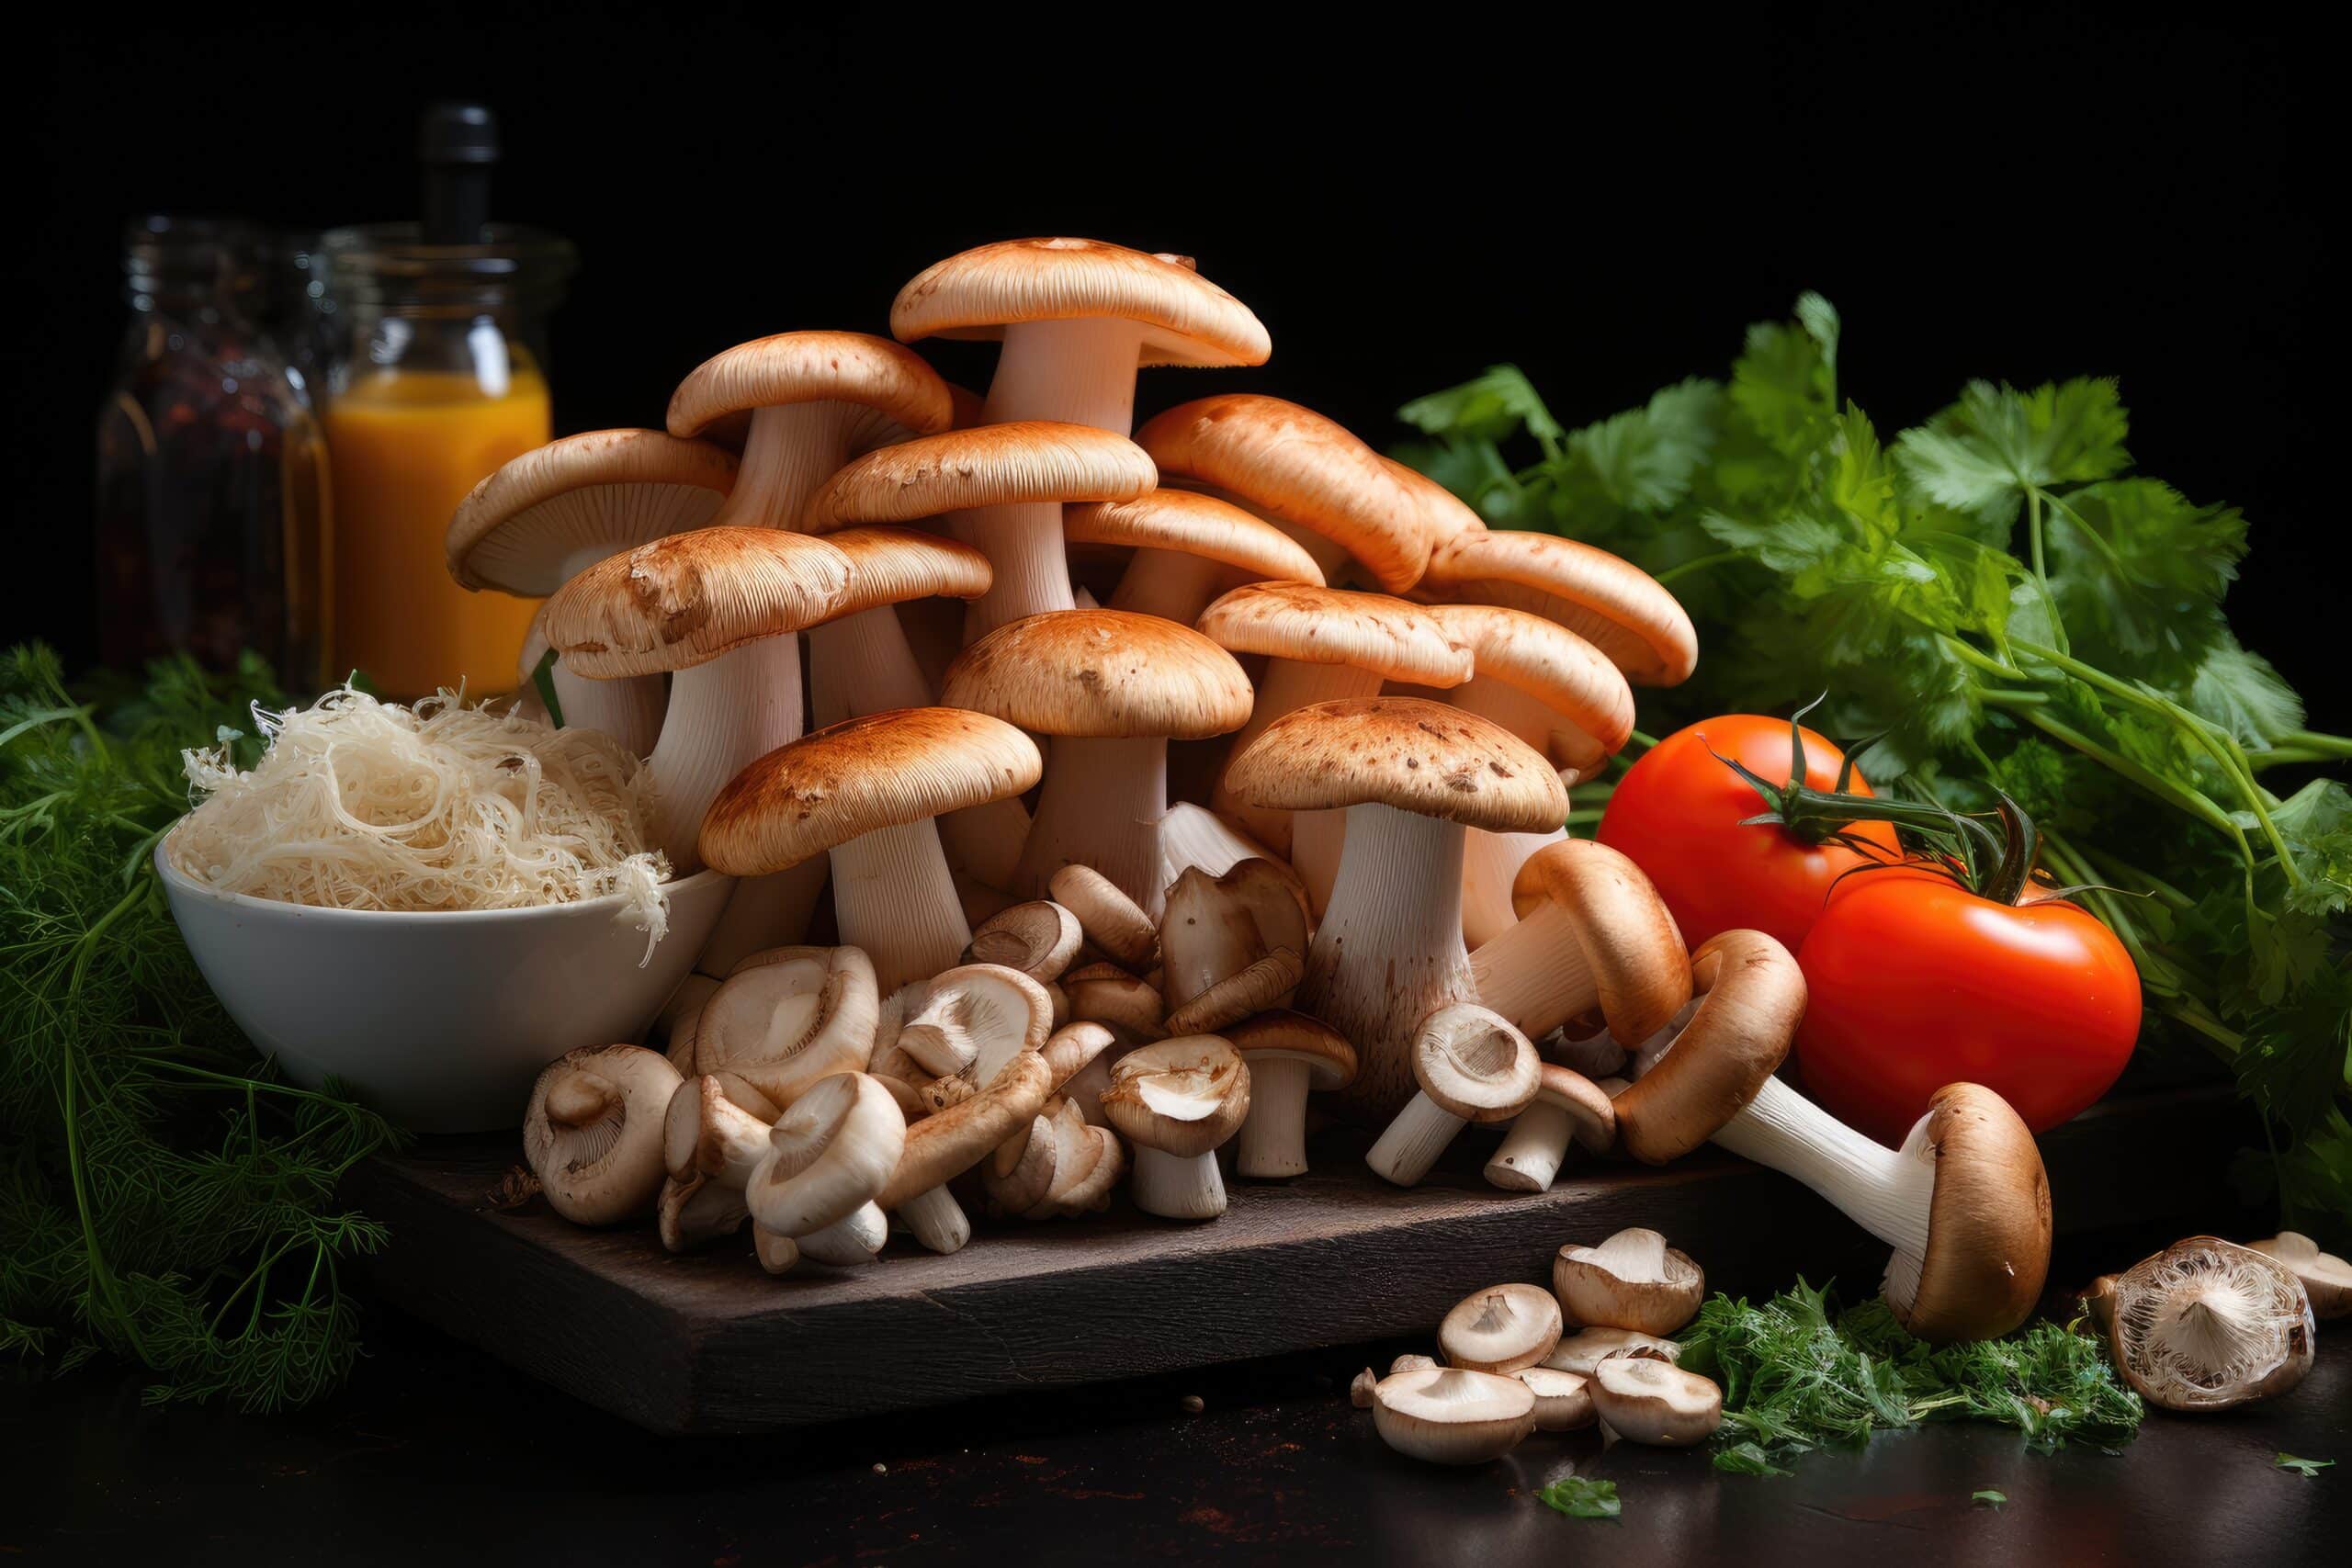 growmyownhealthfood.com : Is light necessary for mushroom growth?